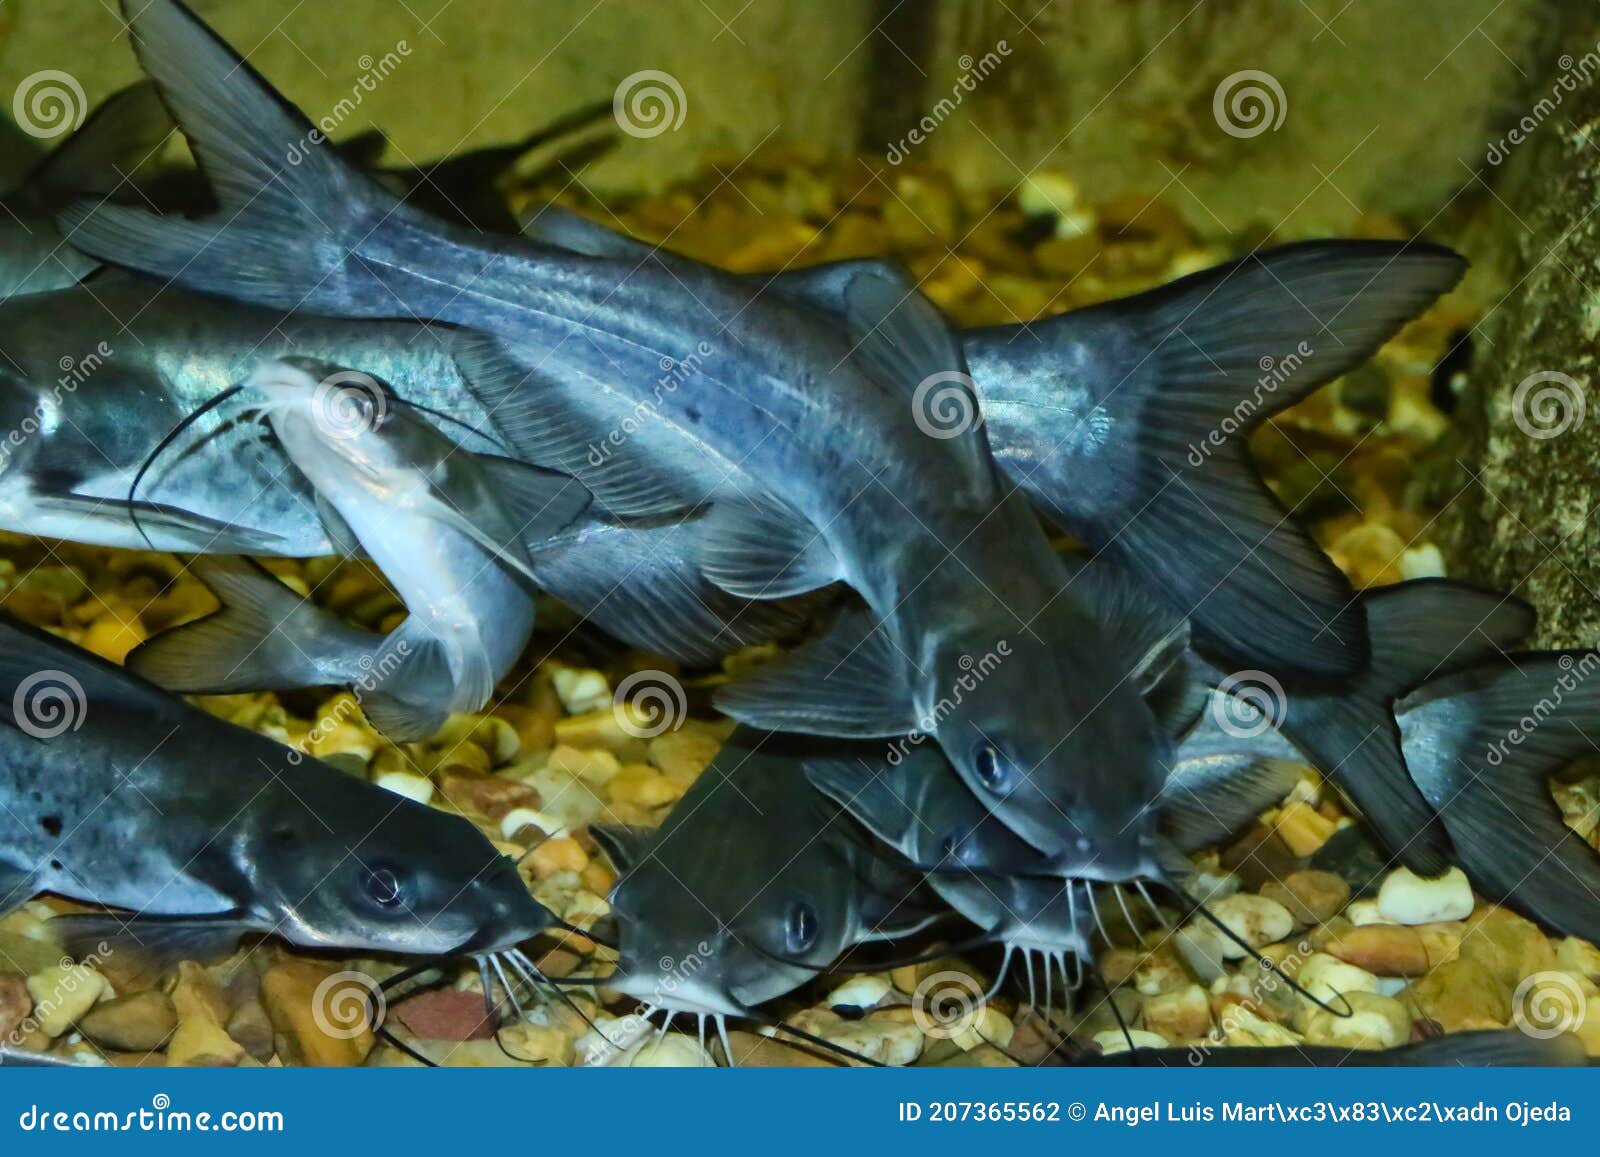 Channel Catfish, Ictalurus punctatus Taken at the Virginia …